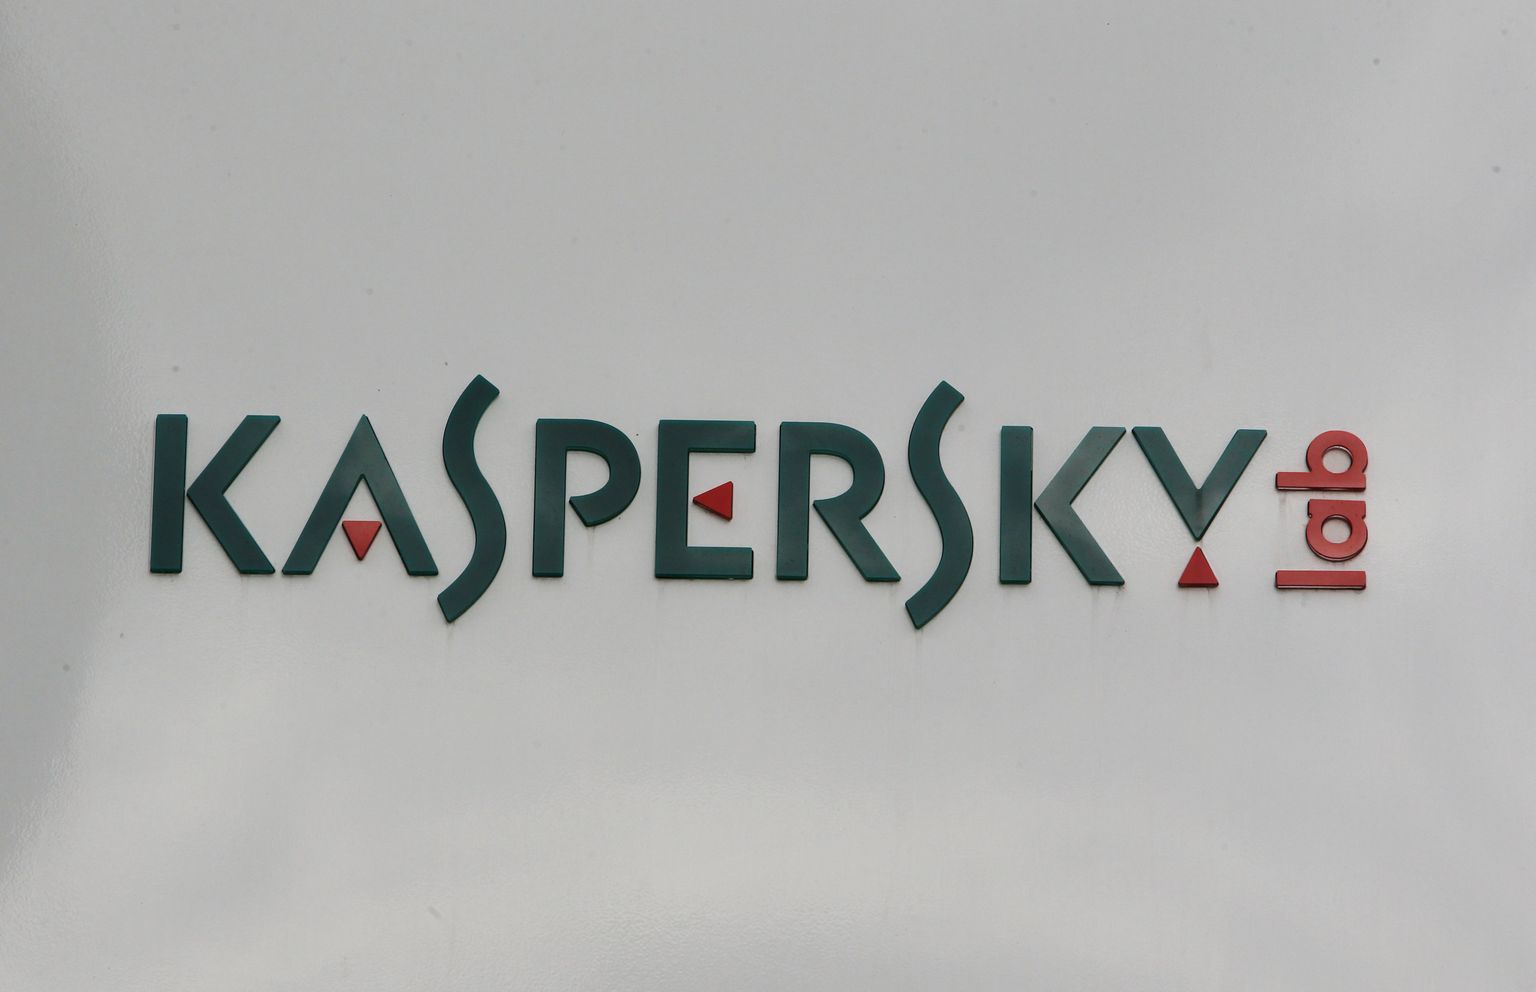 Kaspersky Lab logo.